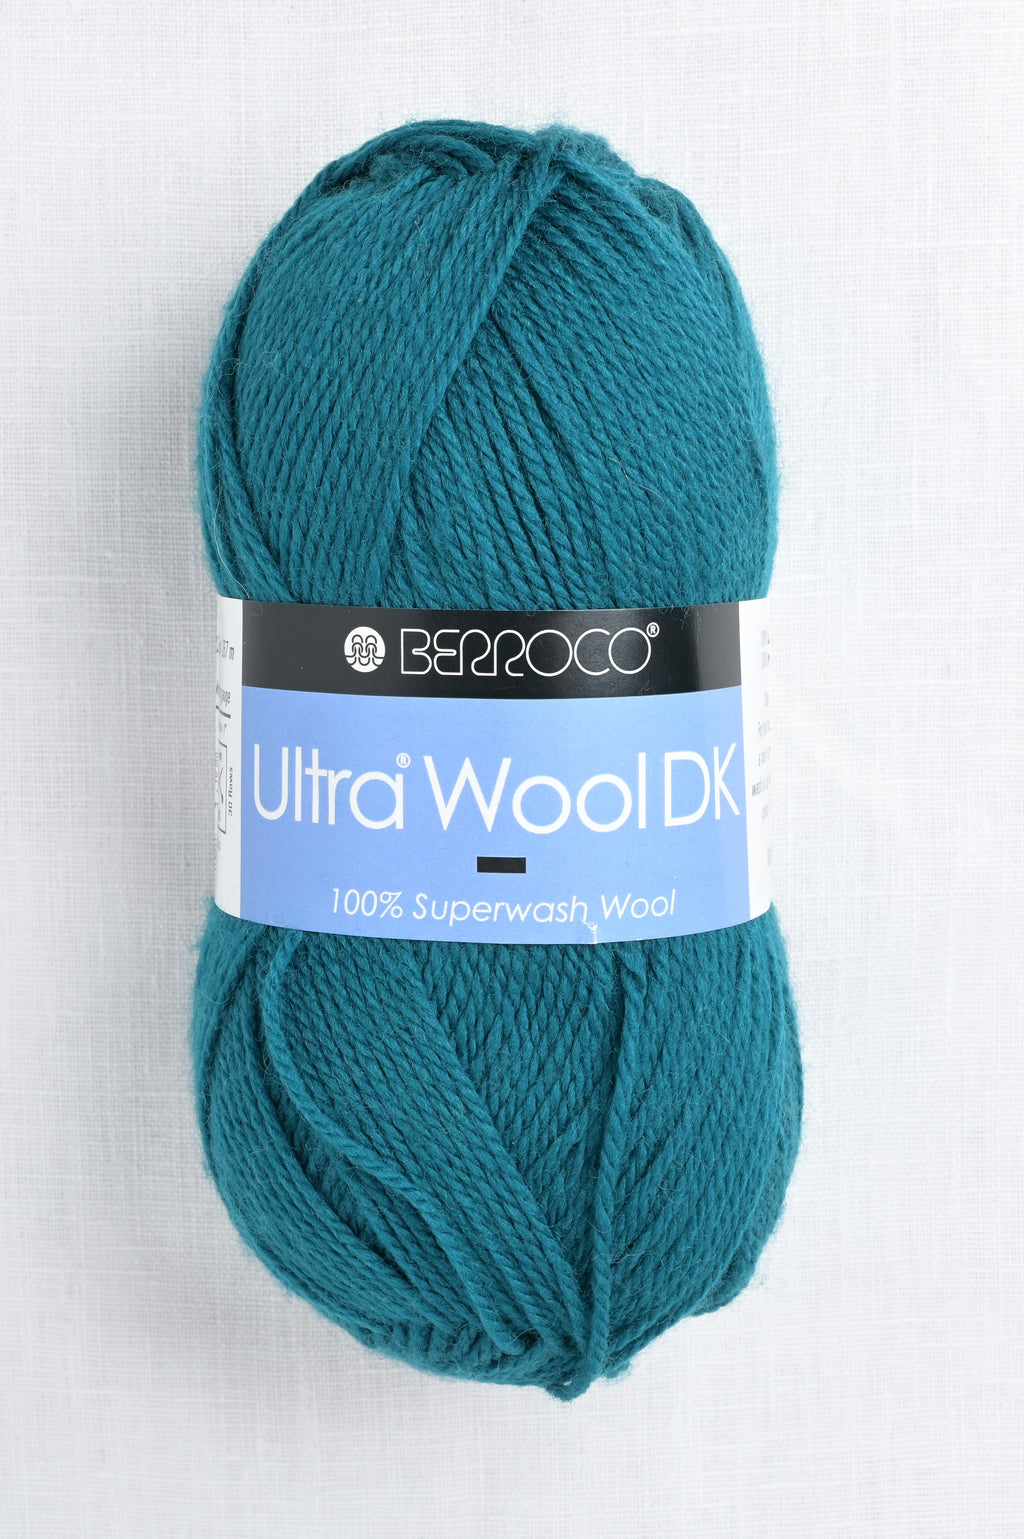 Berroco Ultra Wool DK 8361 and Wool – Kale Company